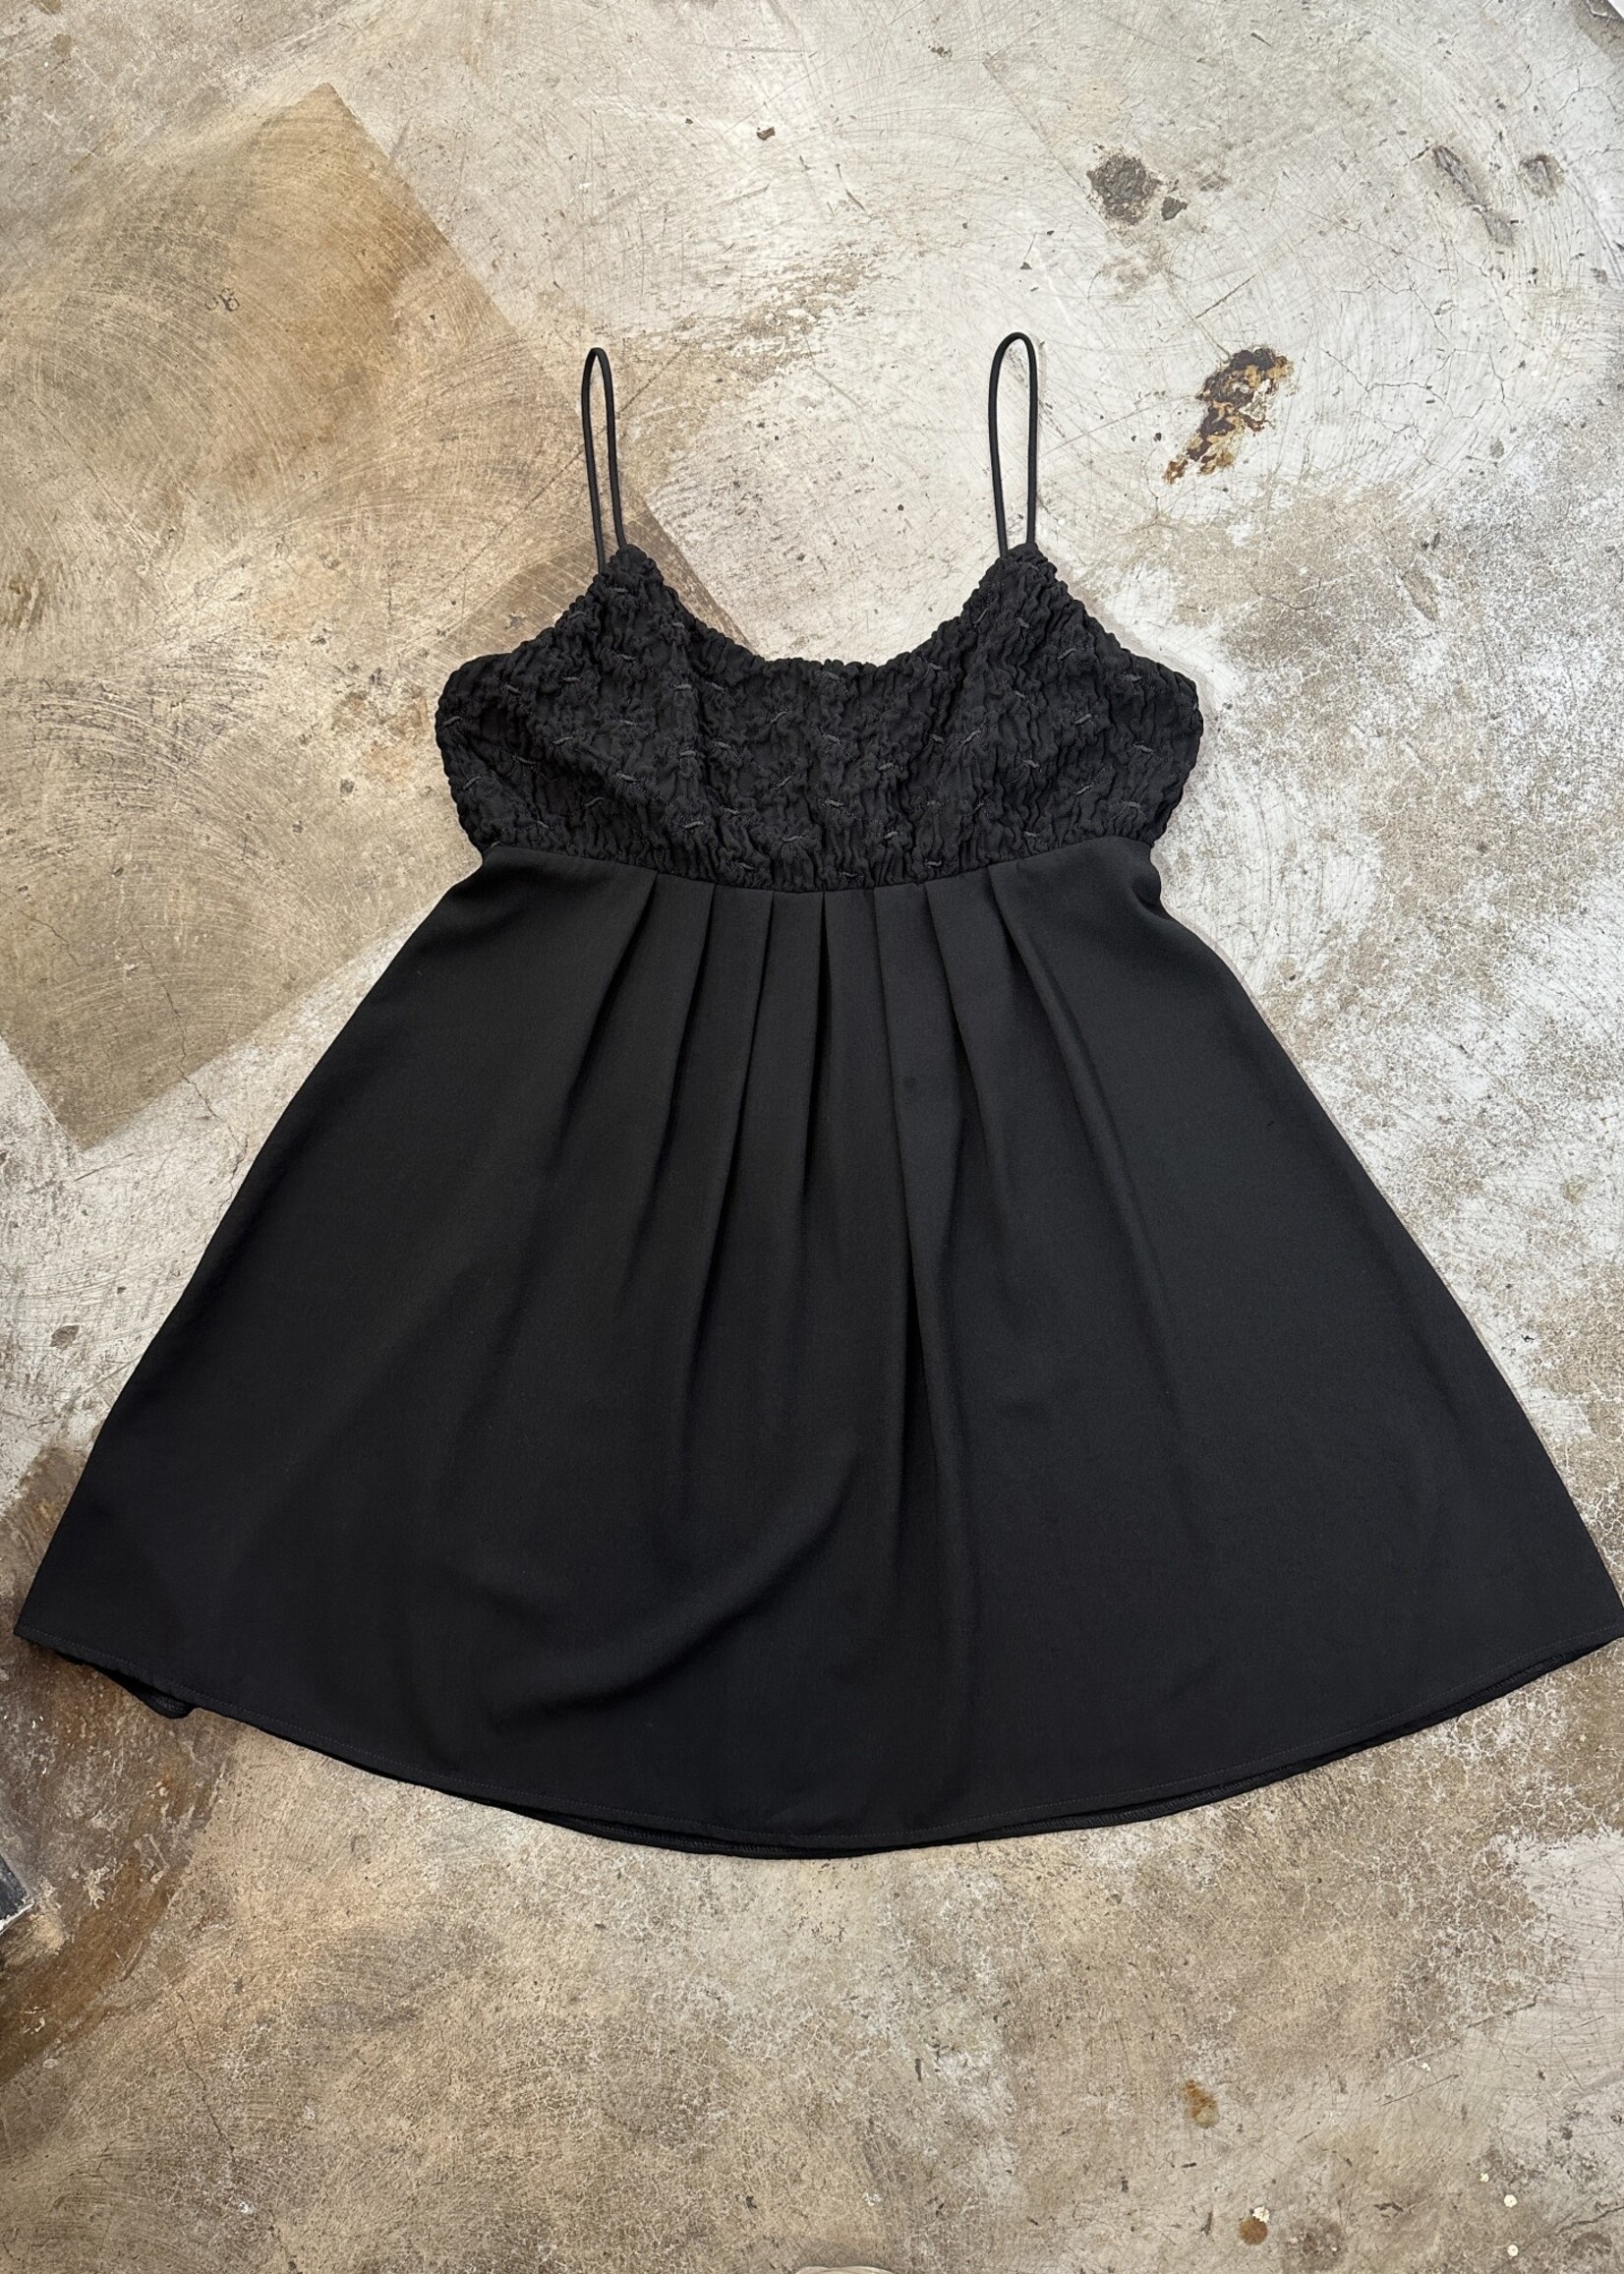 CDC Evening Black Vintage Dress 14